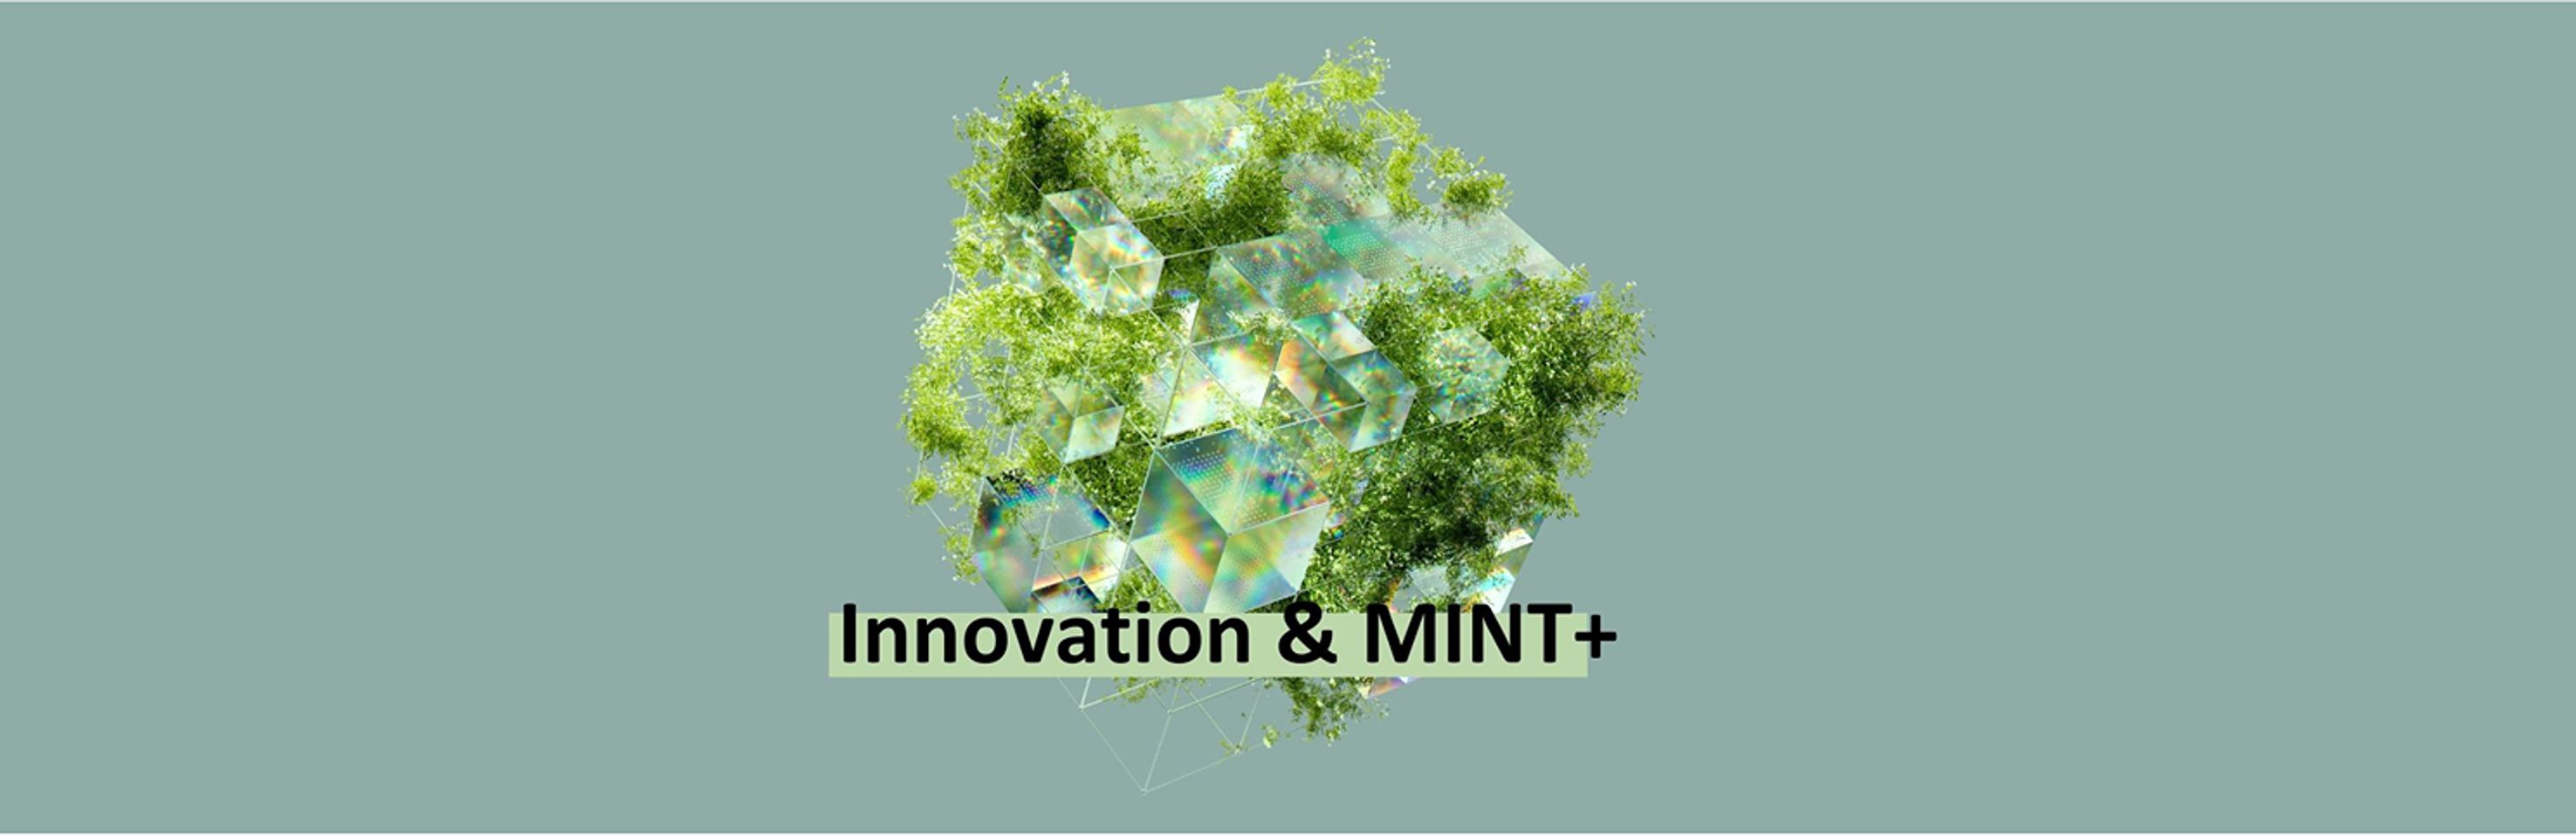 MINT+  & Innovation-Tag